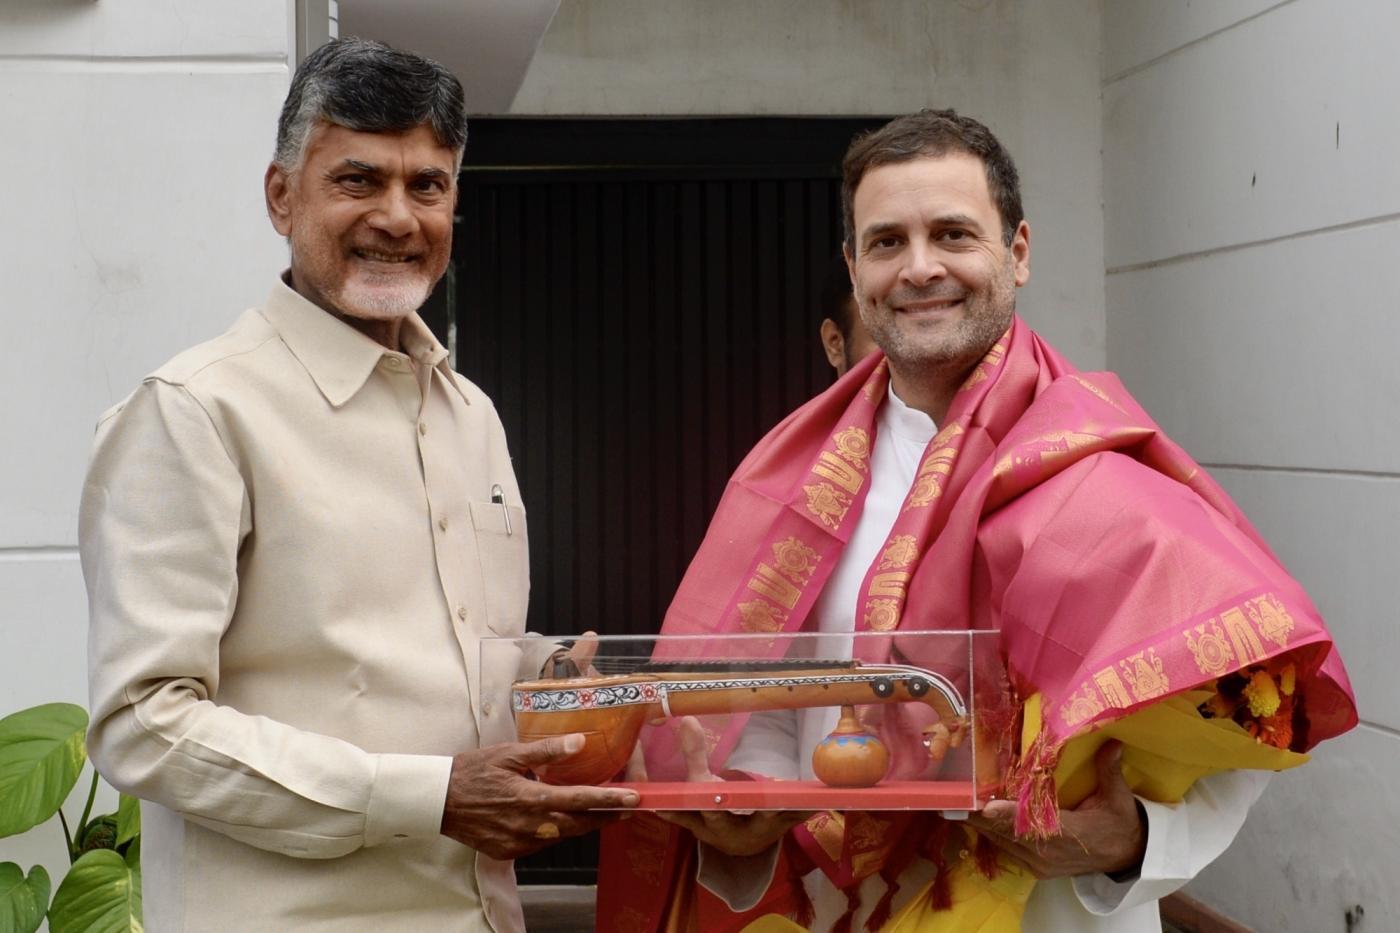 New Delhi: Andhra Pradesh Chief Minister and Telugu Desam Party (TDP) chief N. Chandrababu Naidu meets Congress president Rahul Gandhi at the laters residence in New Delhi on Nov. 1, 2018. (Photo: IANS) by .